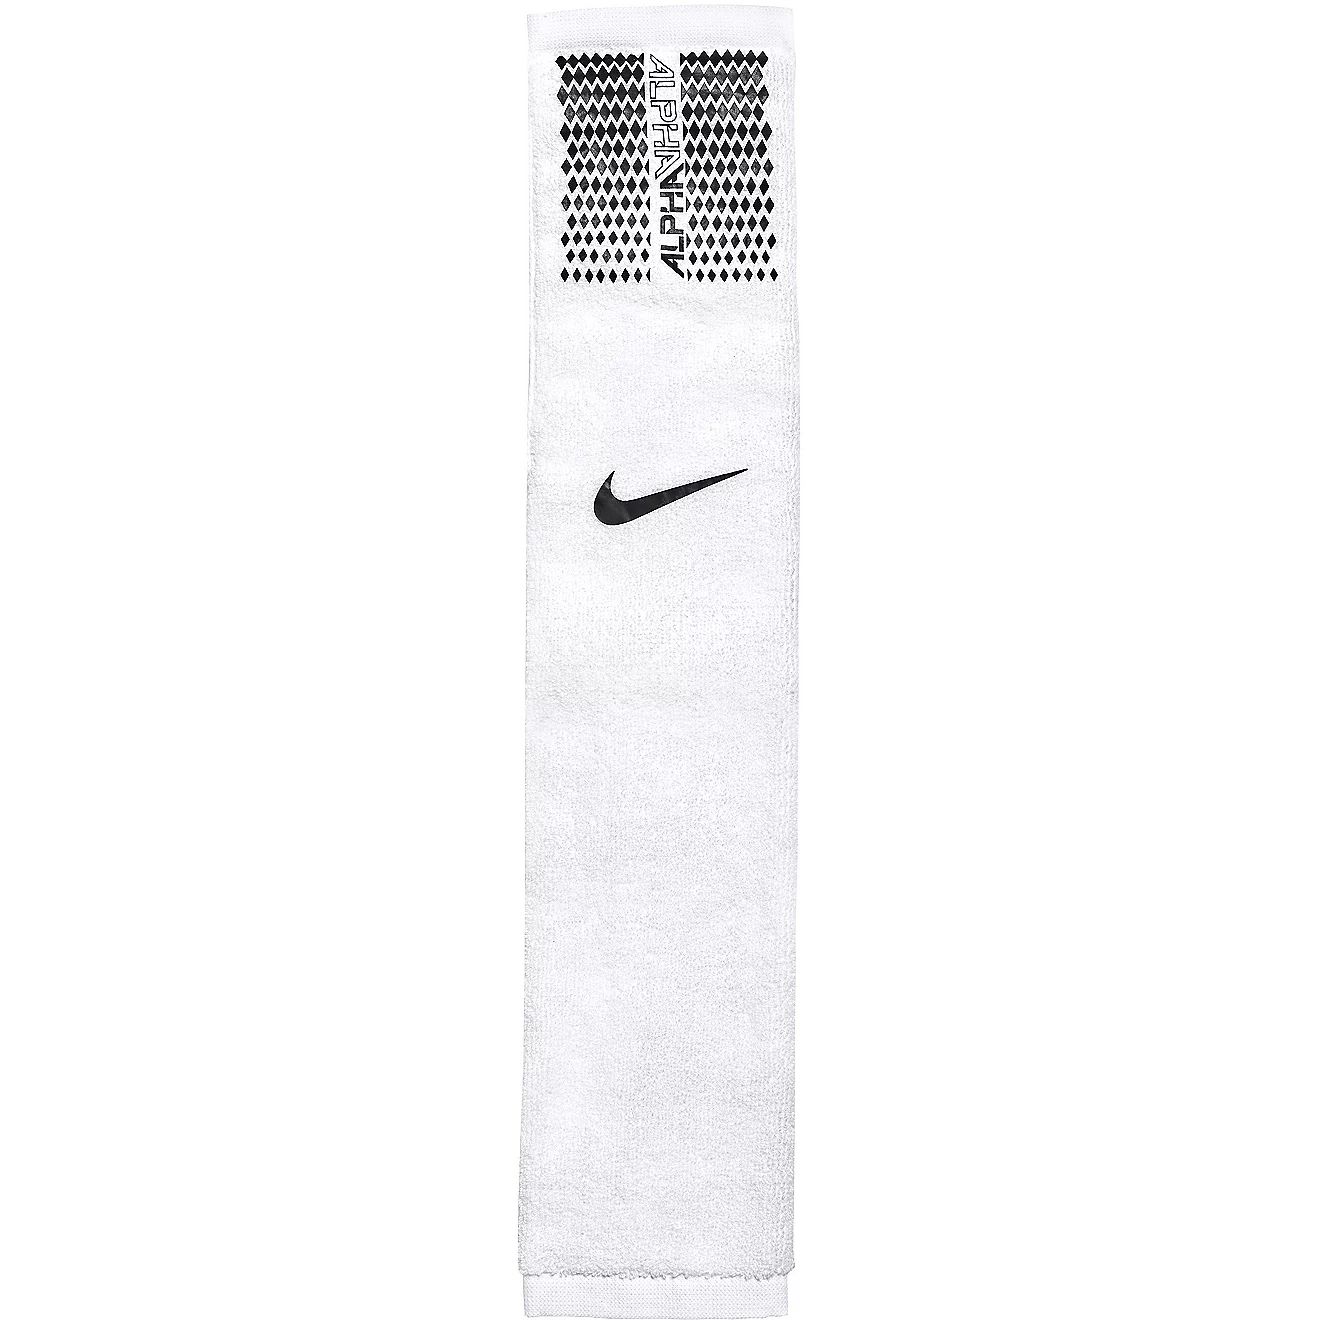 Nike Alpha Football Towel | Academy Sports + Outdoors